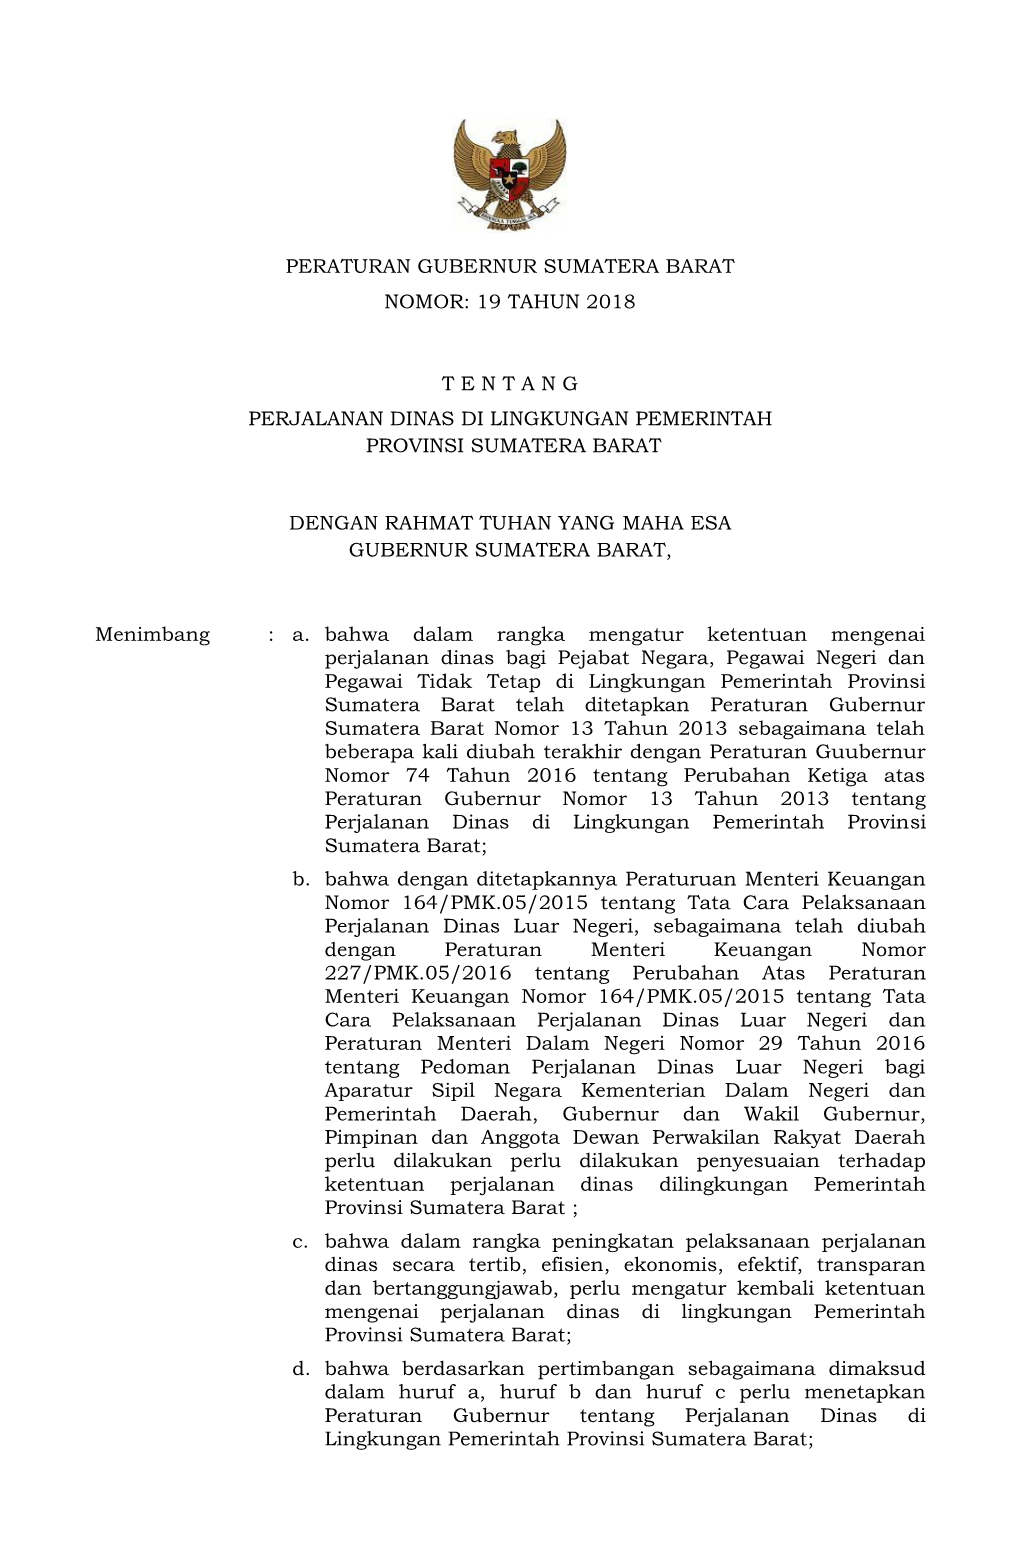 Peraturan Gubernur Sumatera Barat Nomor: 19 Tahun 2018